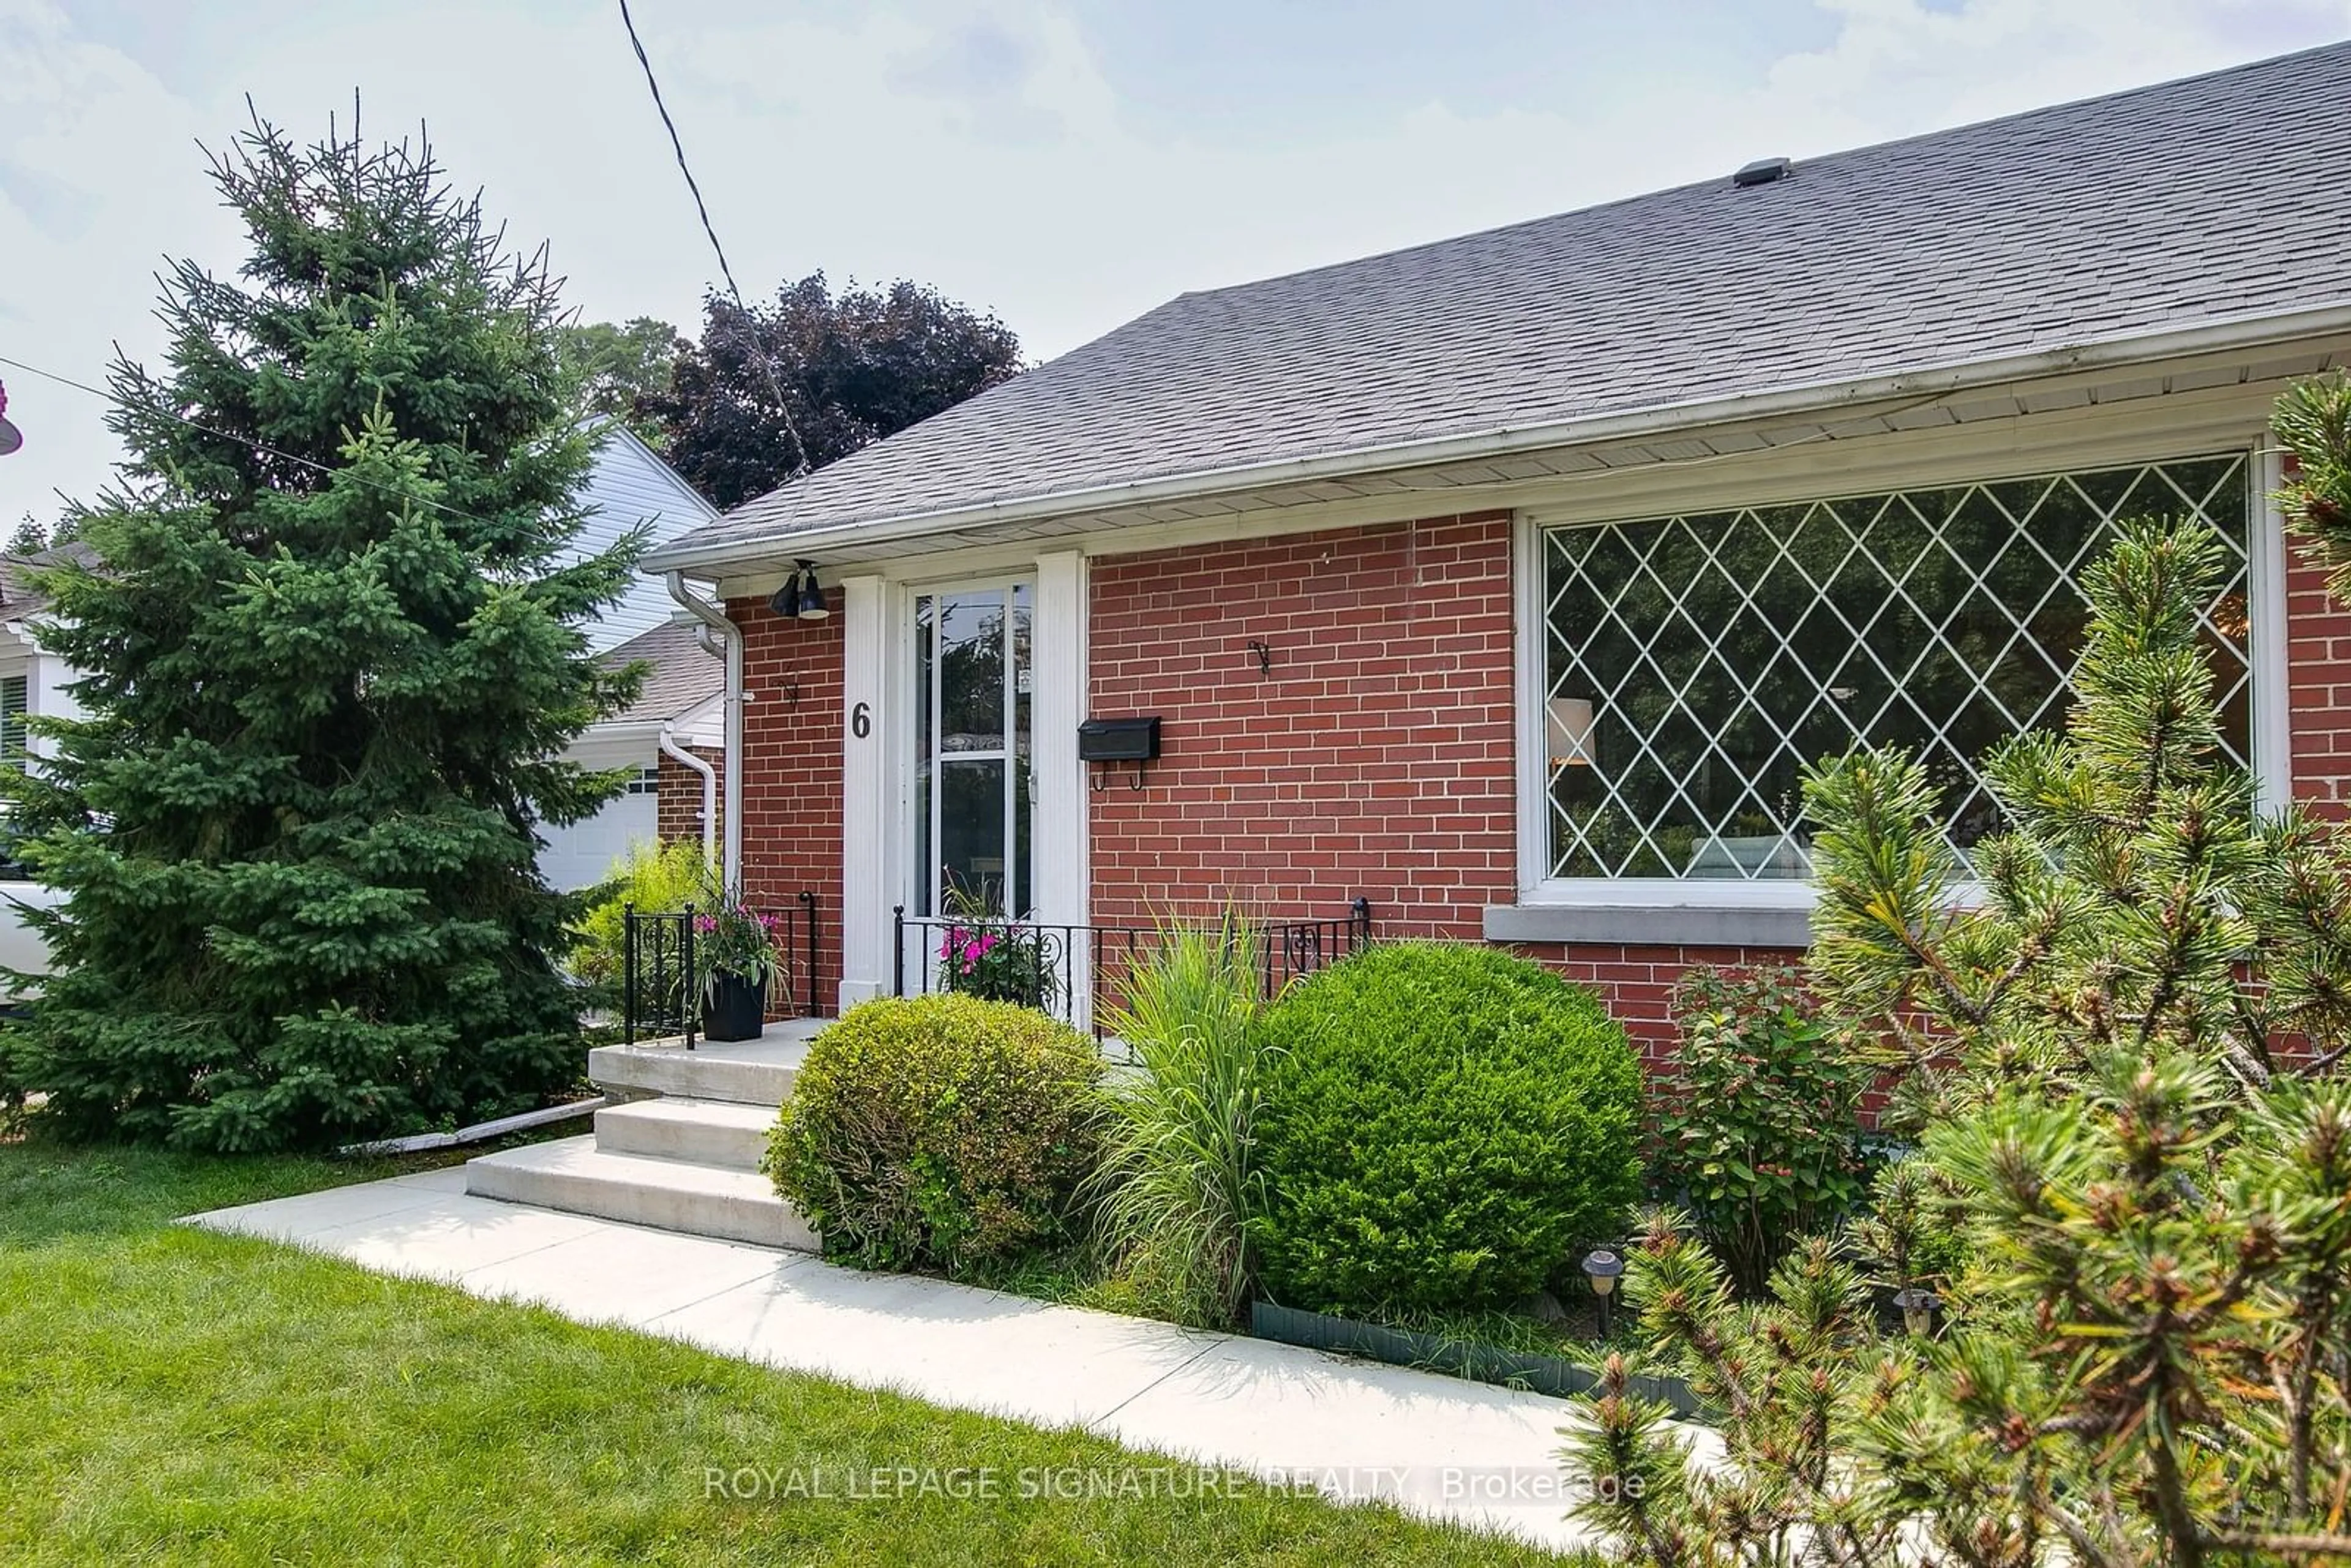 Home with brick exterior material for 6 Glenn Arthur Dr, Toronto Ontario M8Y 3H5